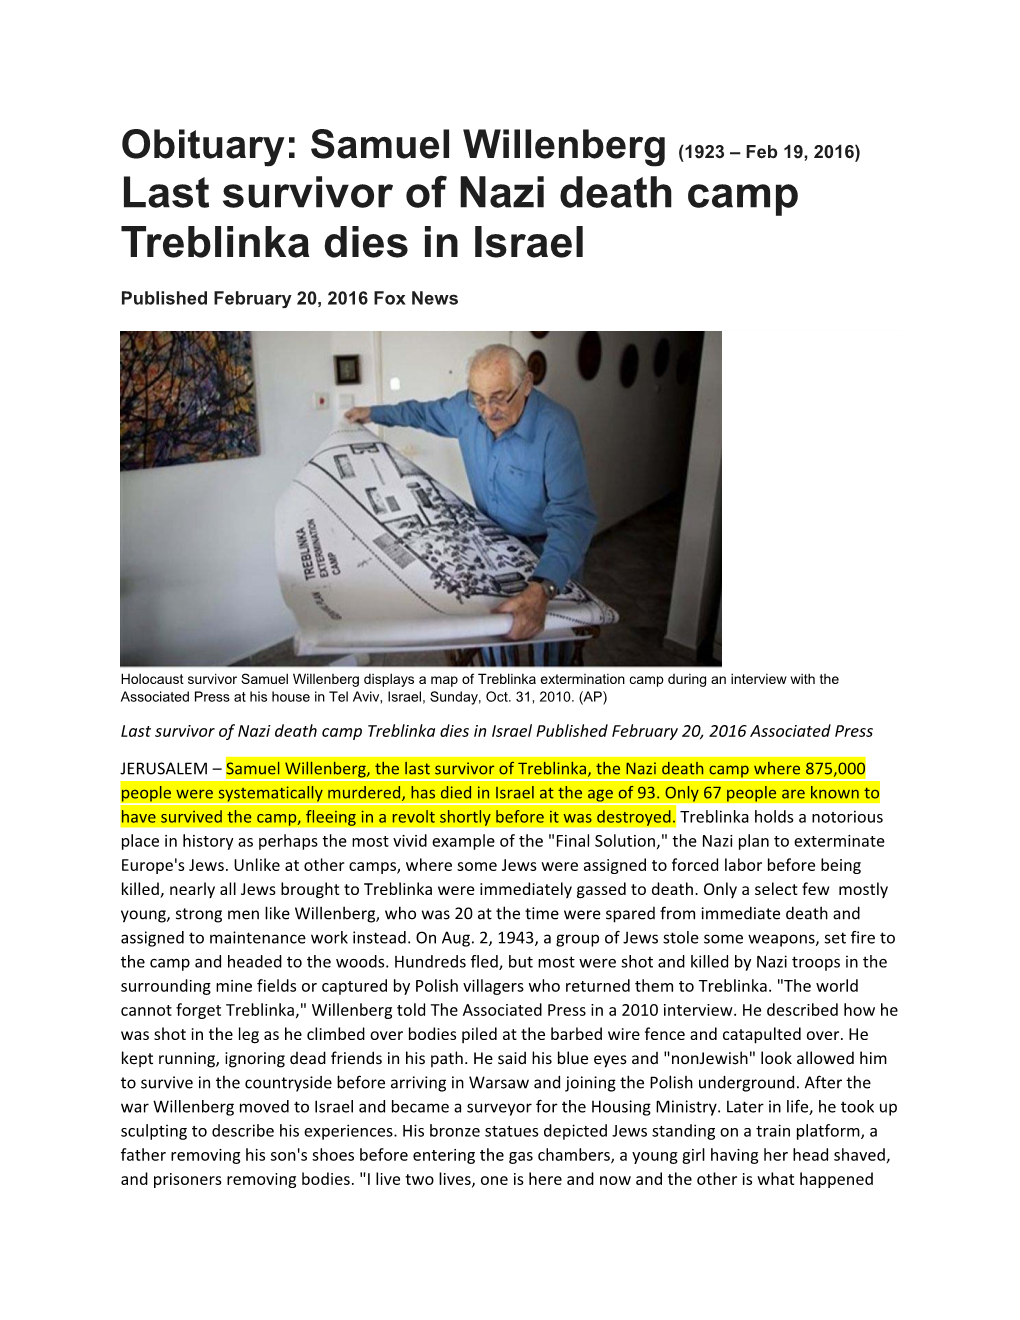 Last Survivor of Nazi Death Camp Treblinka Dies in Israel